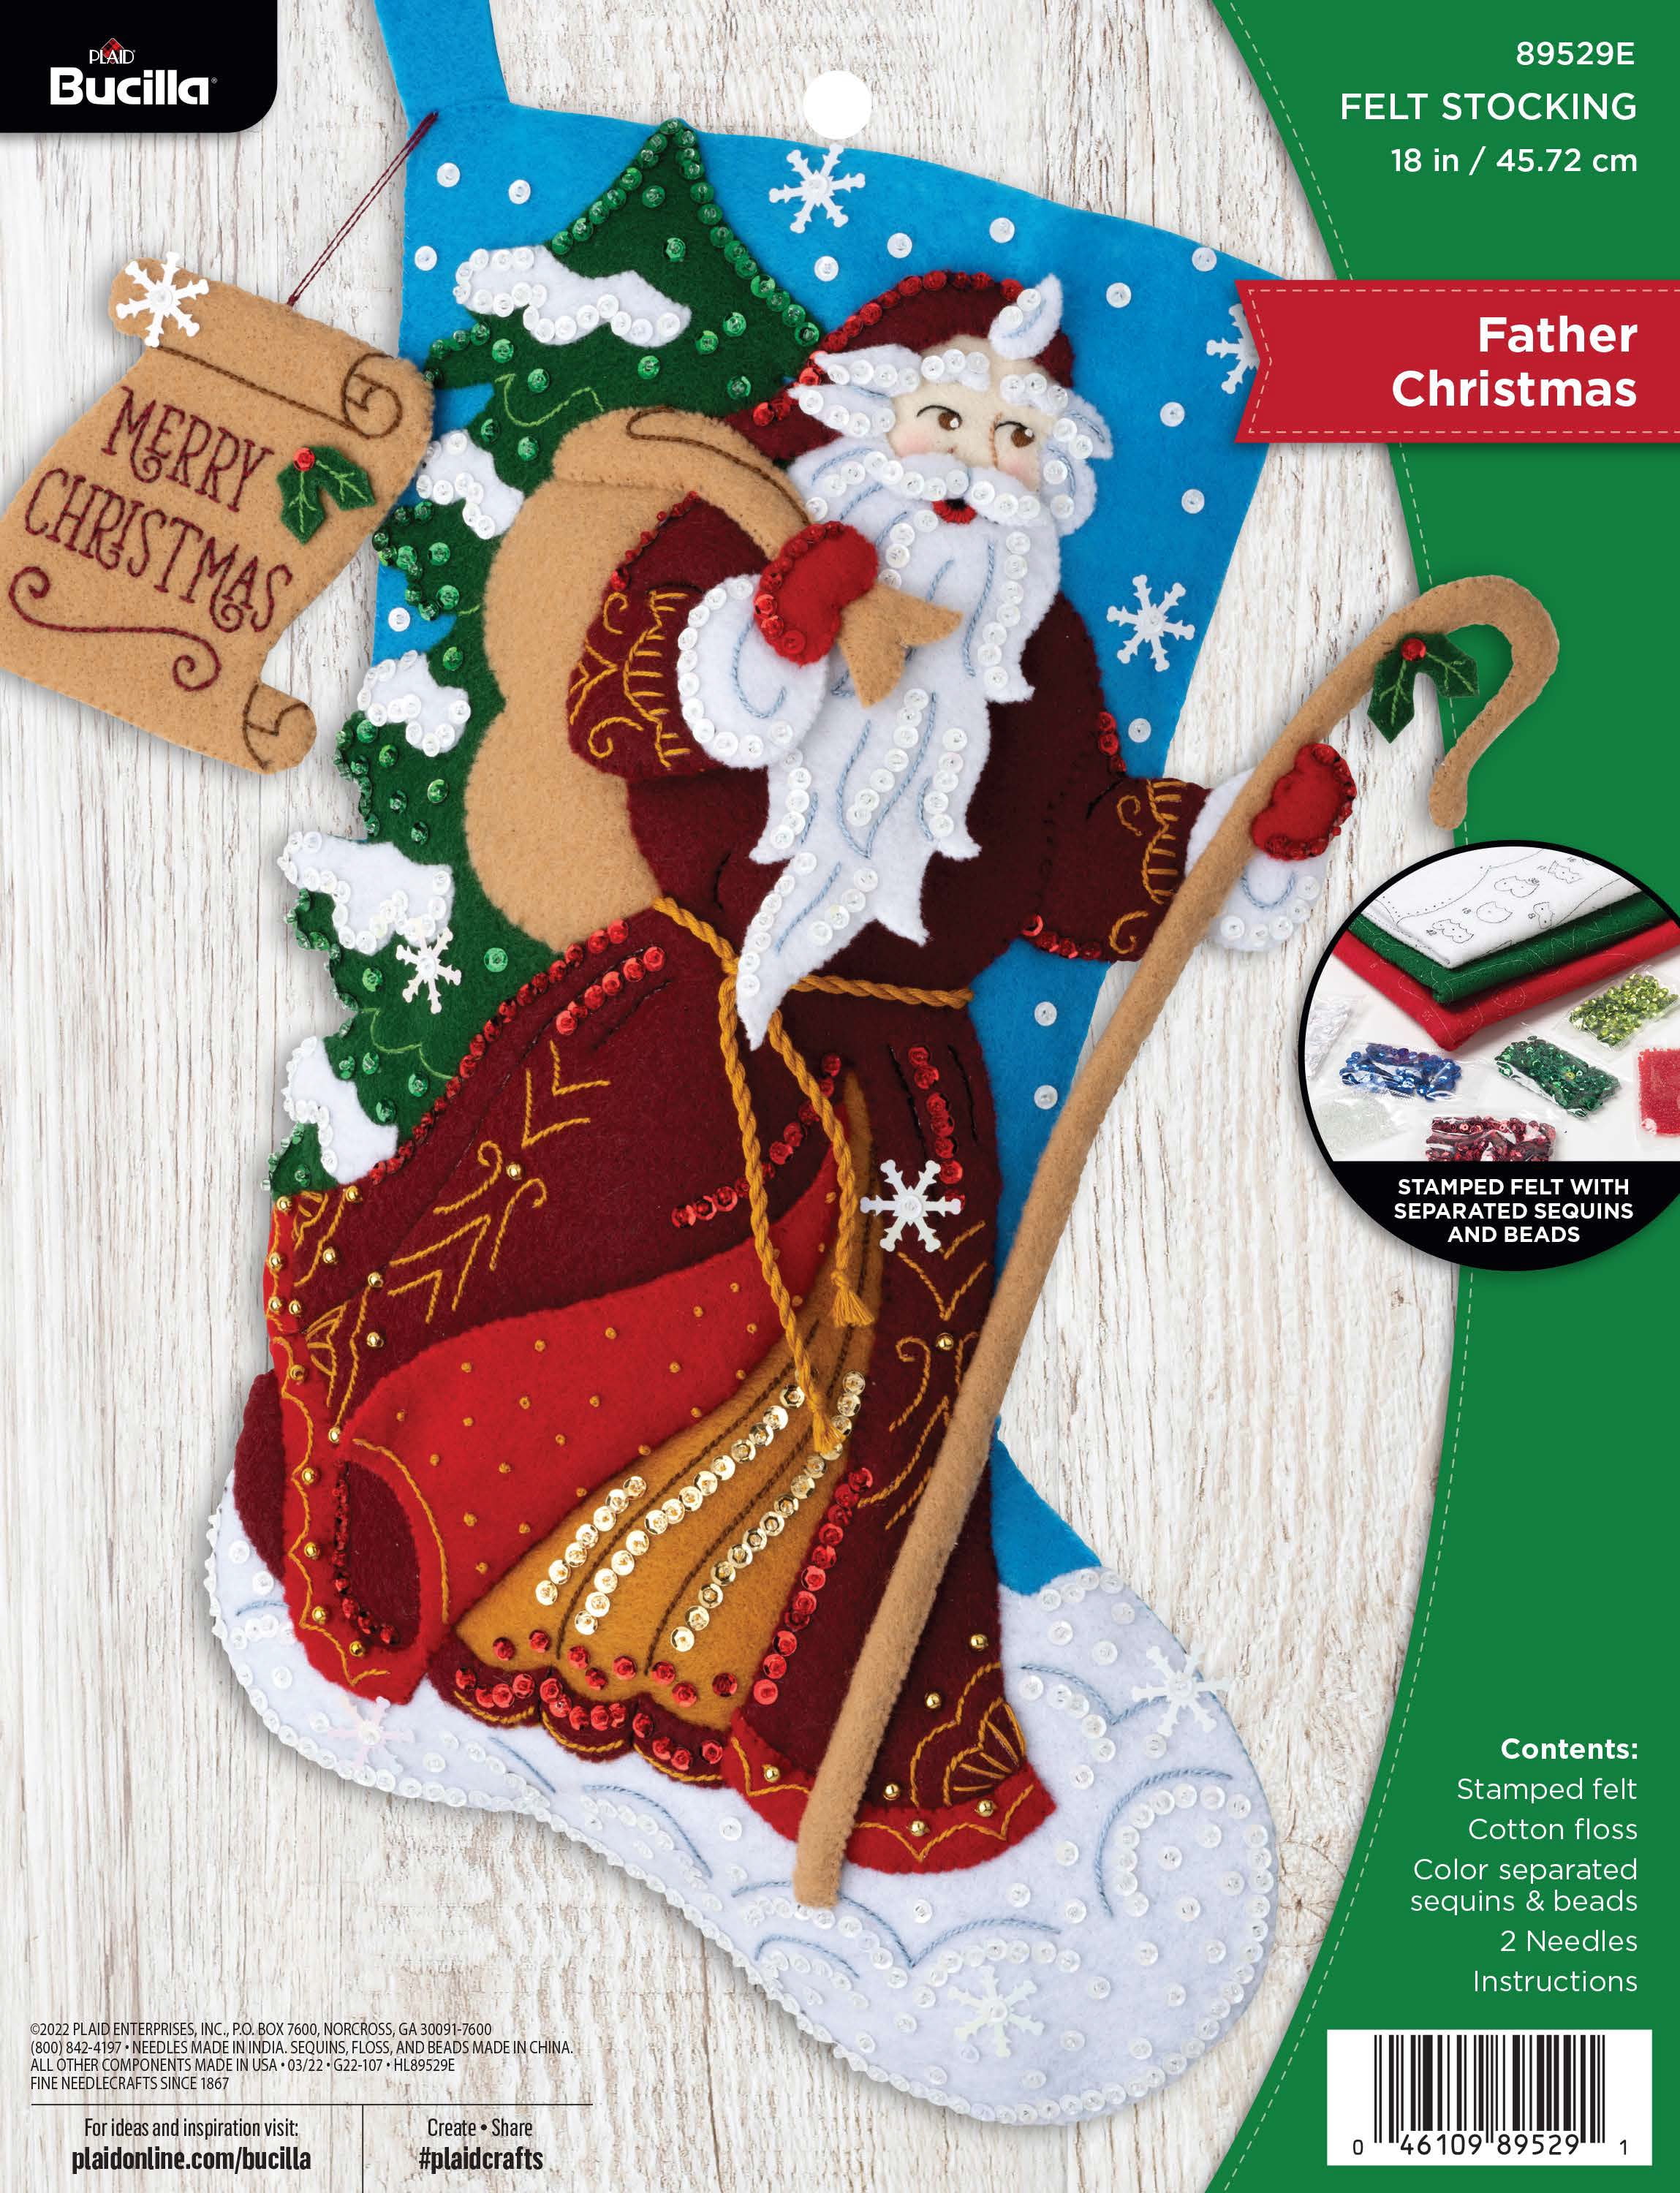 Plaid Bucilla Ho Ho Ho Santa felt stocking kit 18” Christmas Santa